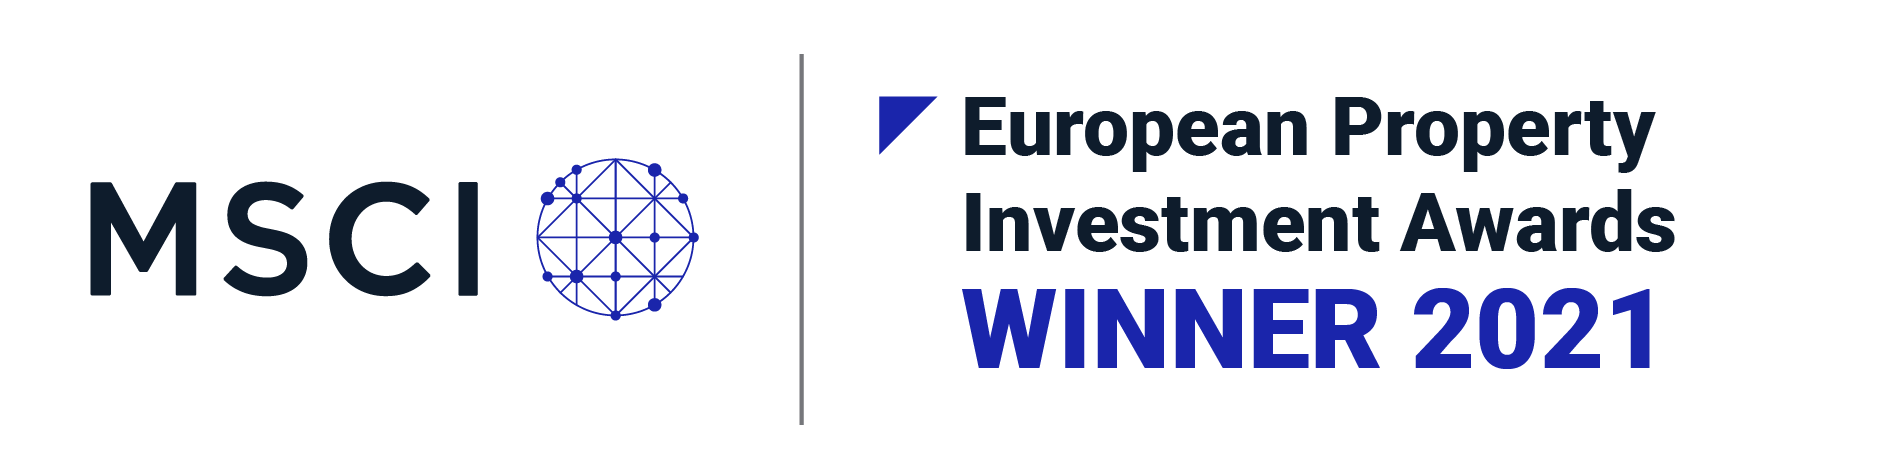 European_Property_Awards_2021_WinnerAward